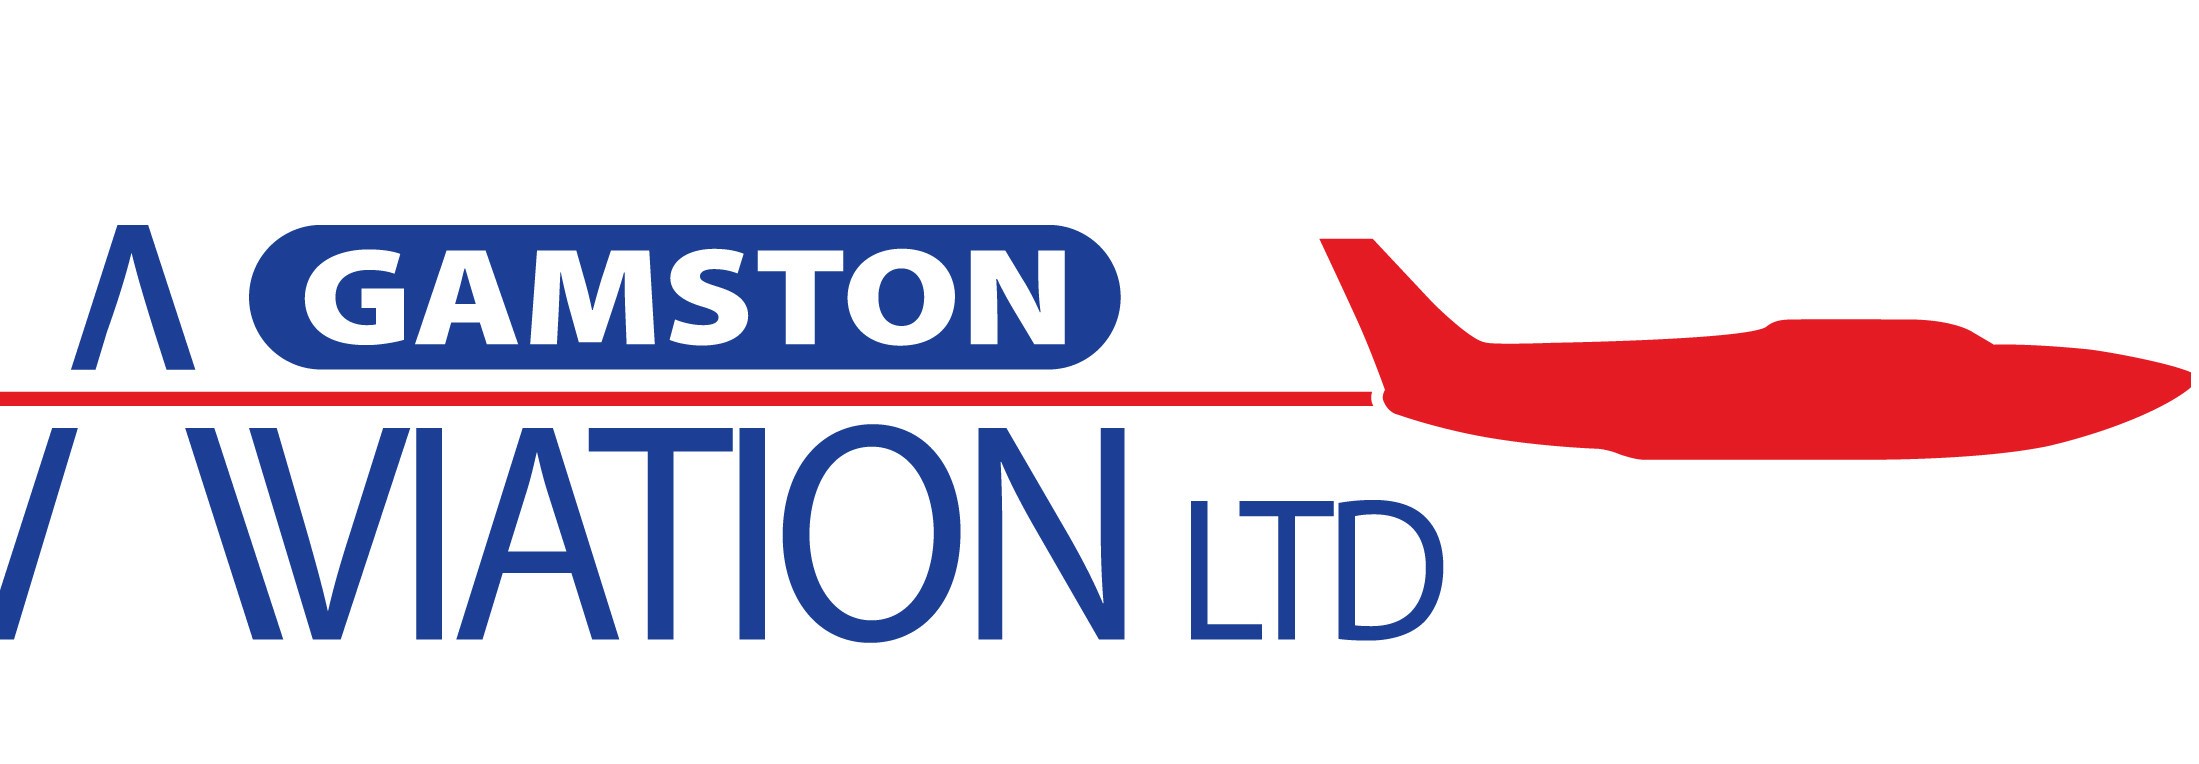 Gamston logo.jpg